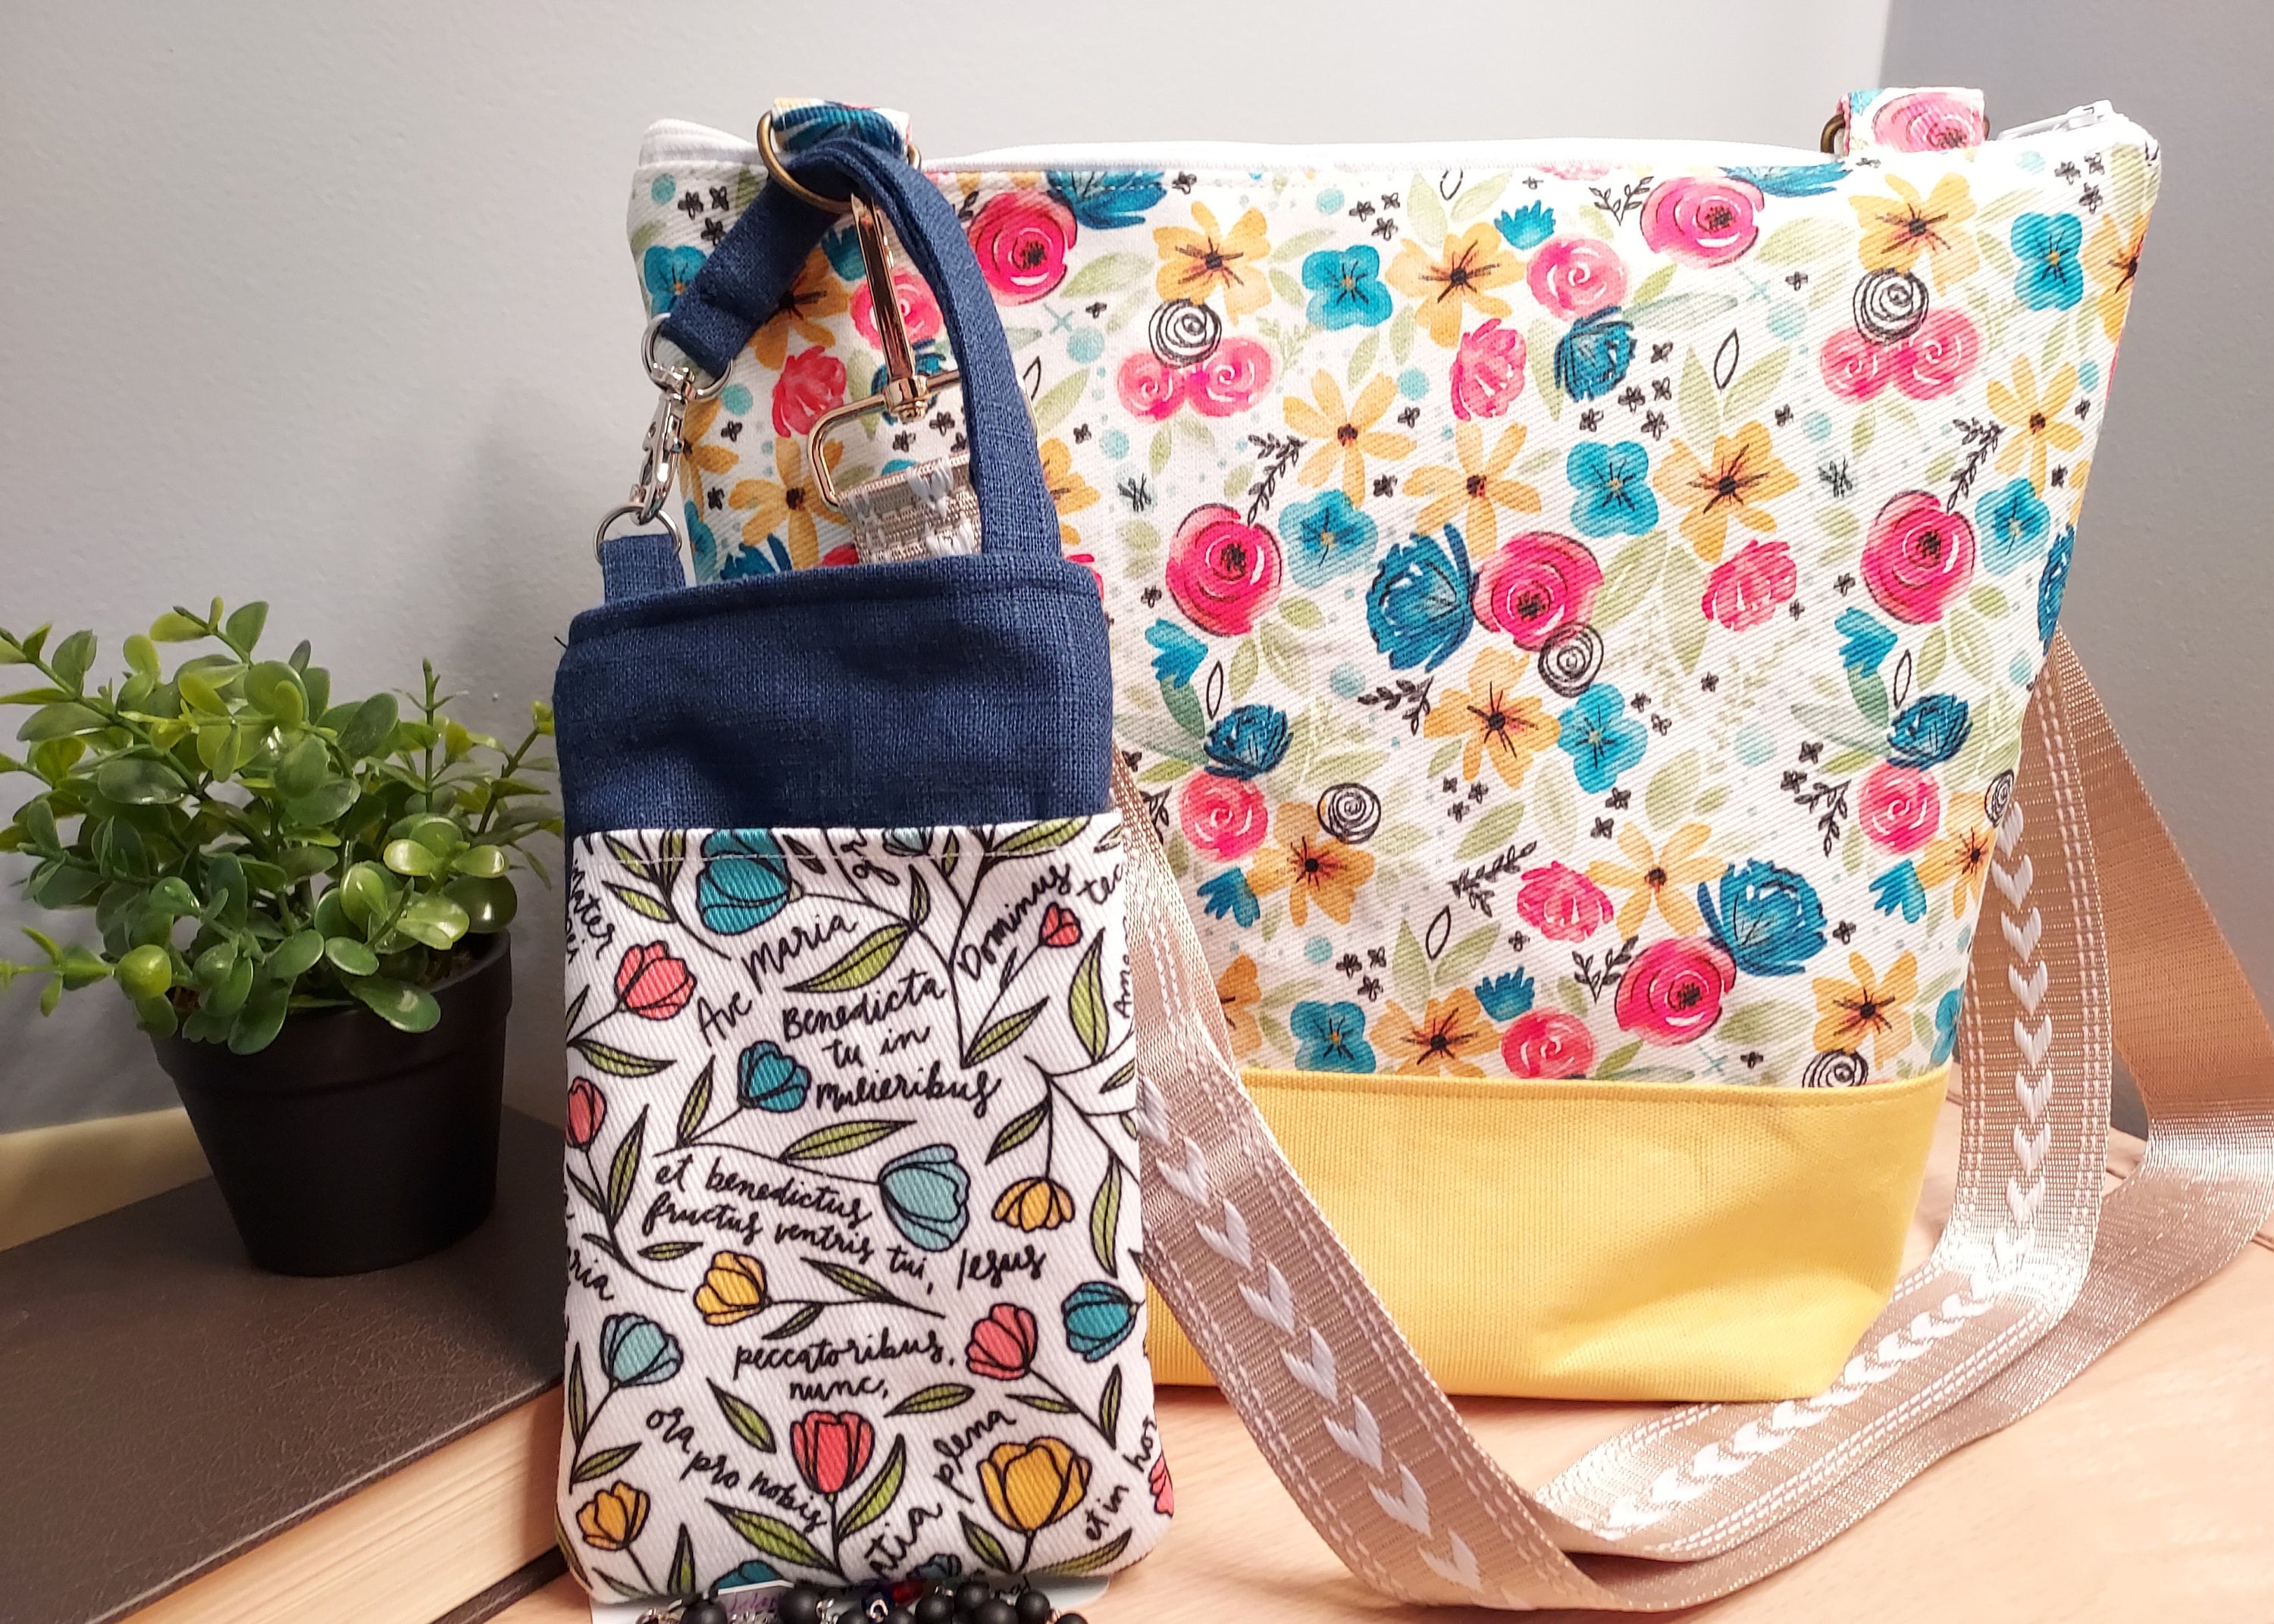 Crochet Handbag Patterns - Pinterest Best | The WHOot | Handbag patterns,  Crochet handbag patterns, Crochet